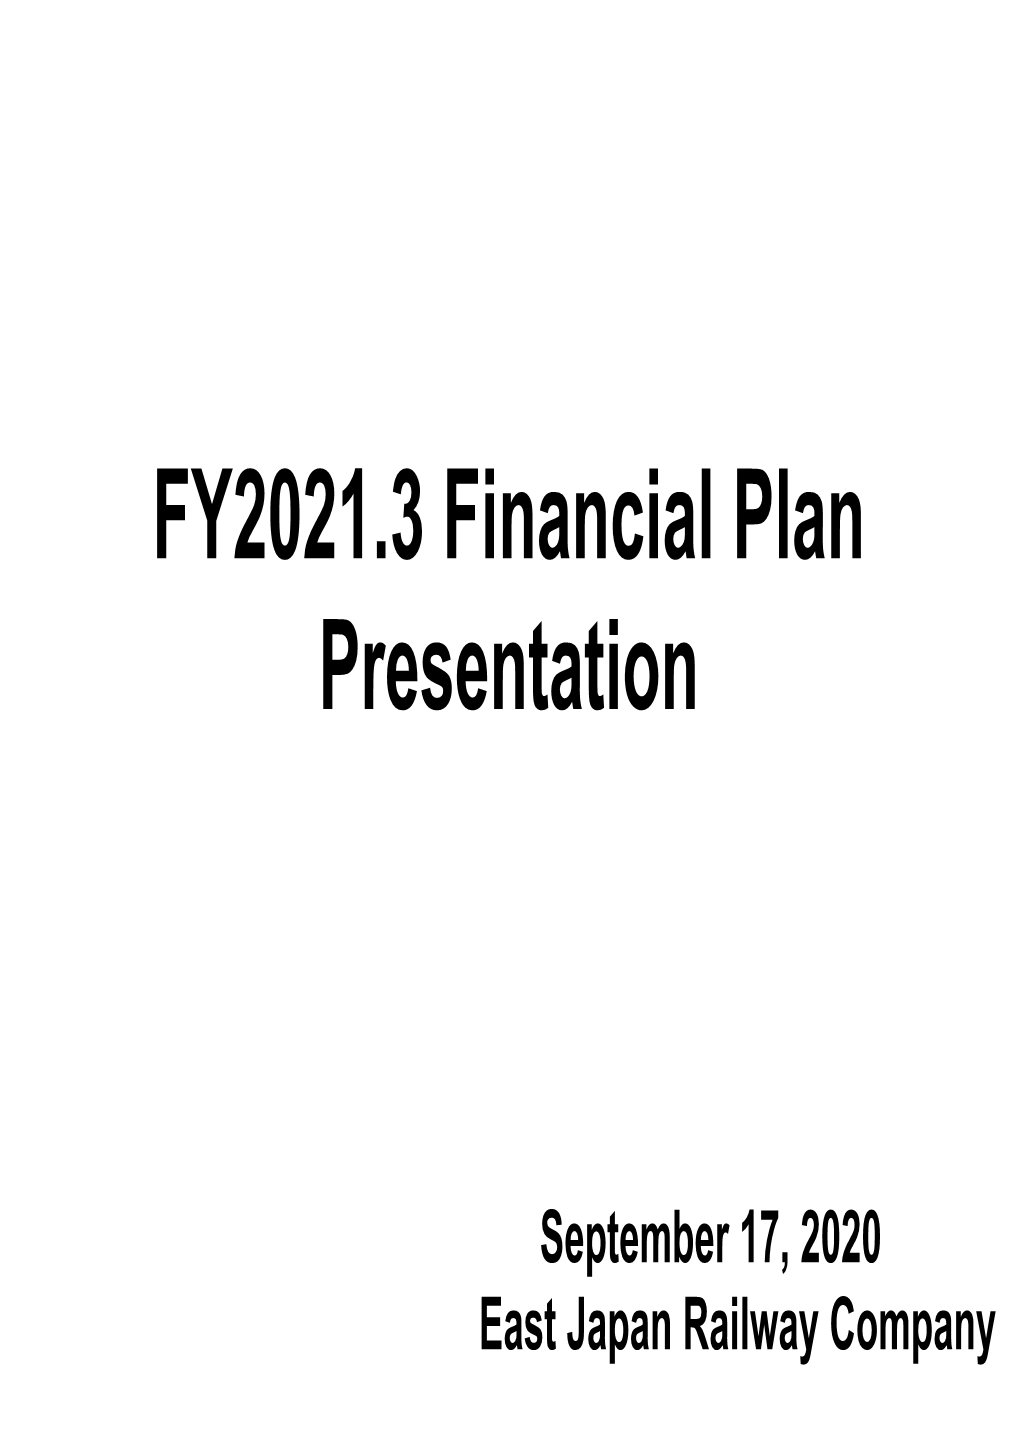 FY2021.3 Financial Plan Presentation